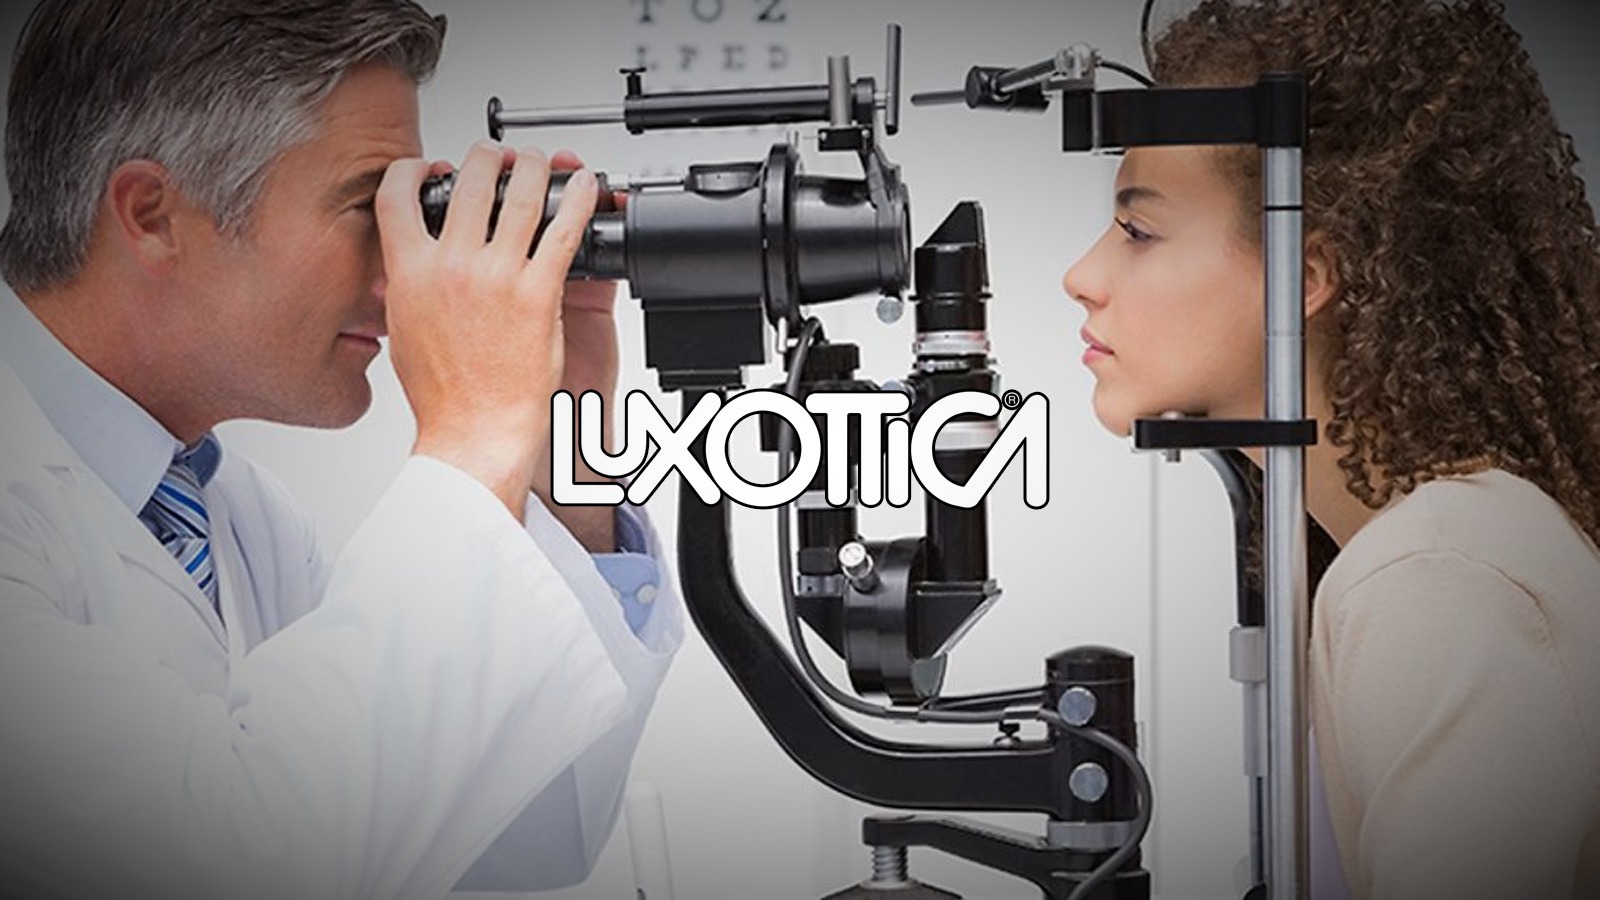 Luxottica eye care